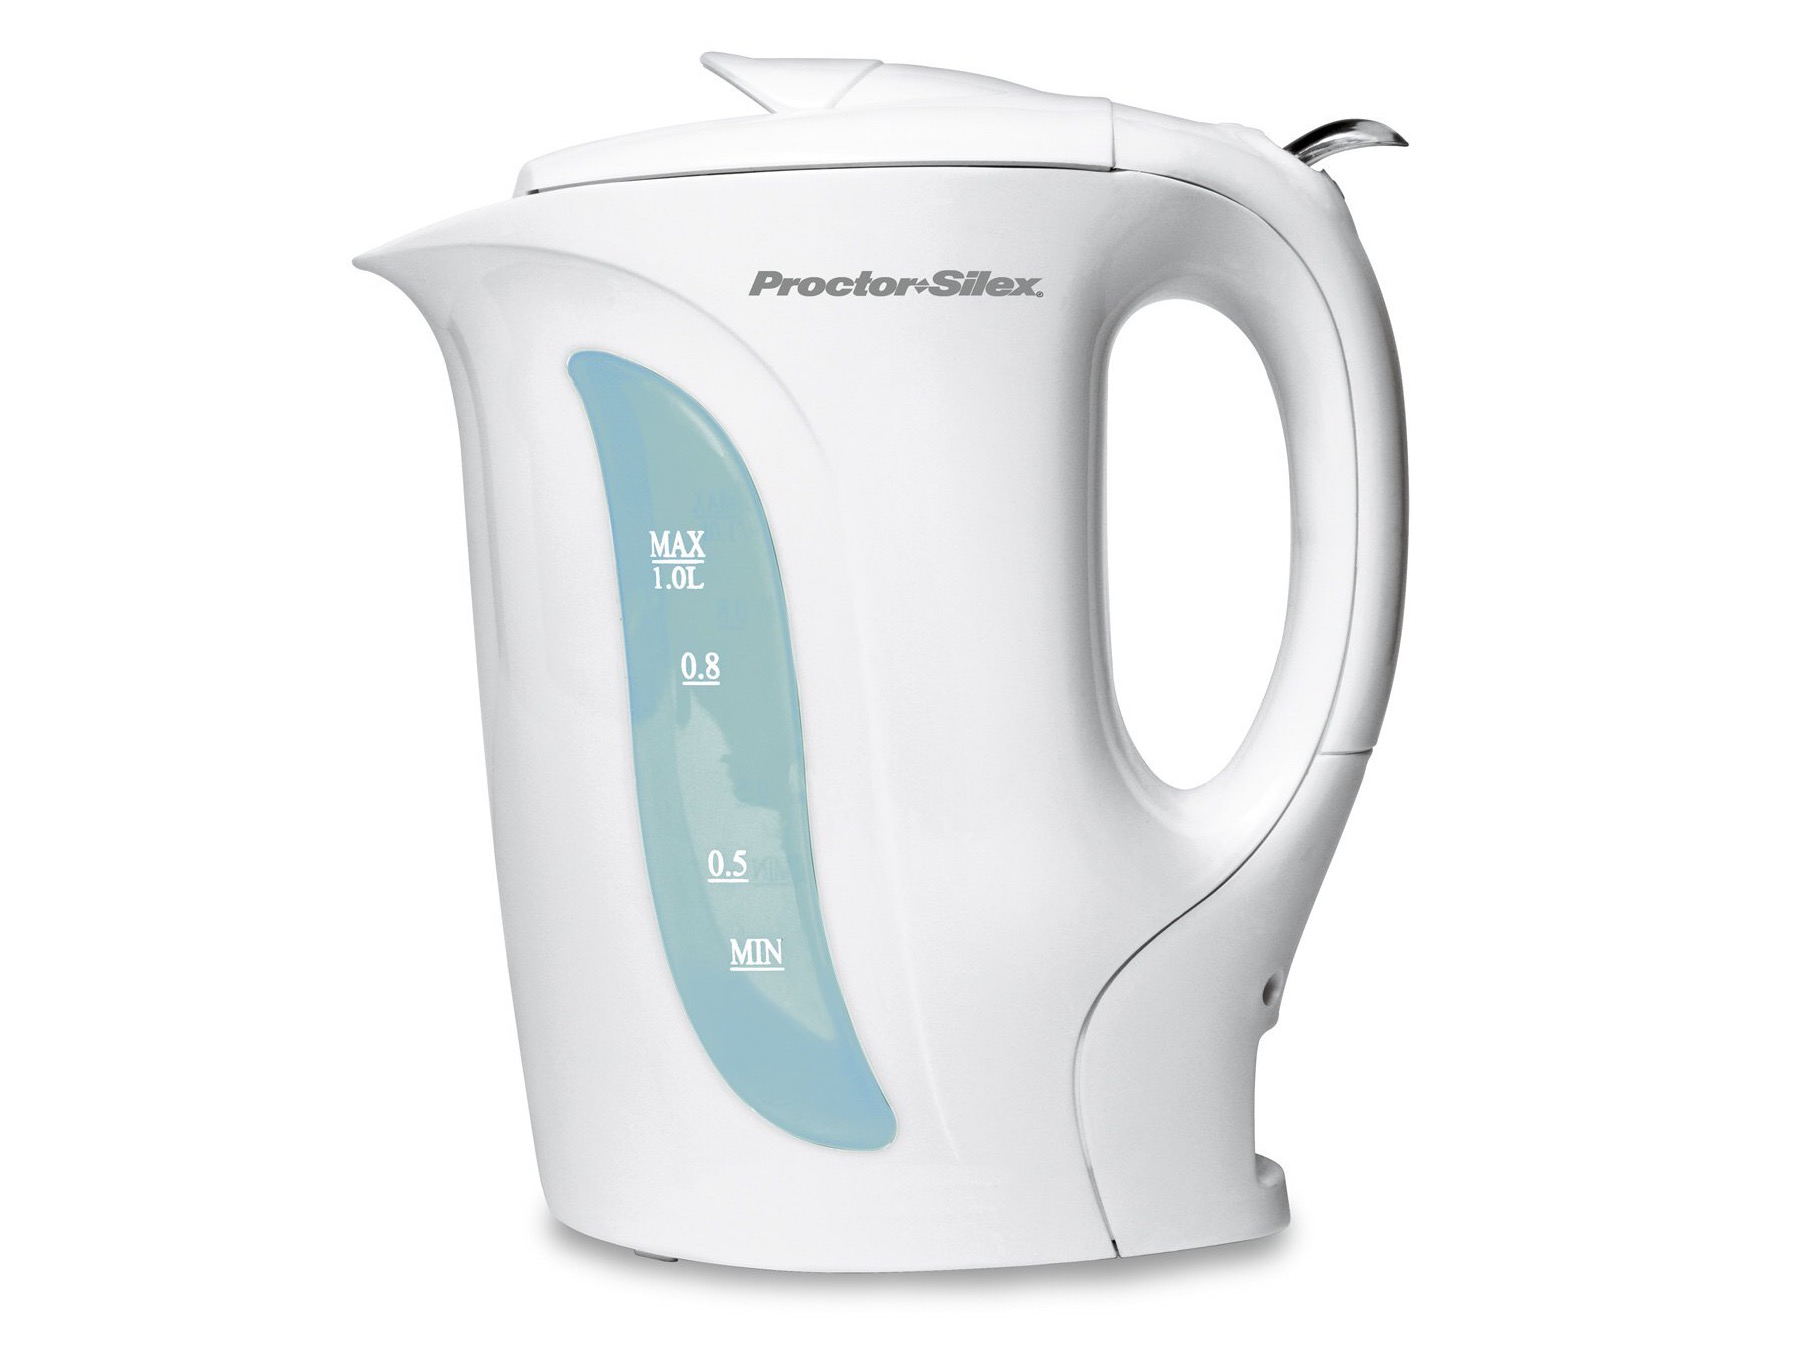 Proctor Silex's 1-liter electric kettle. ($15)